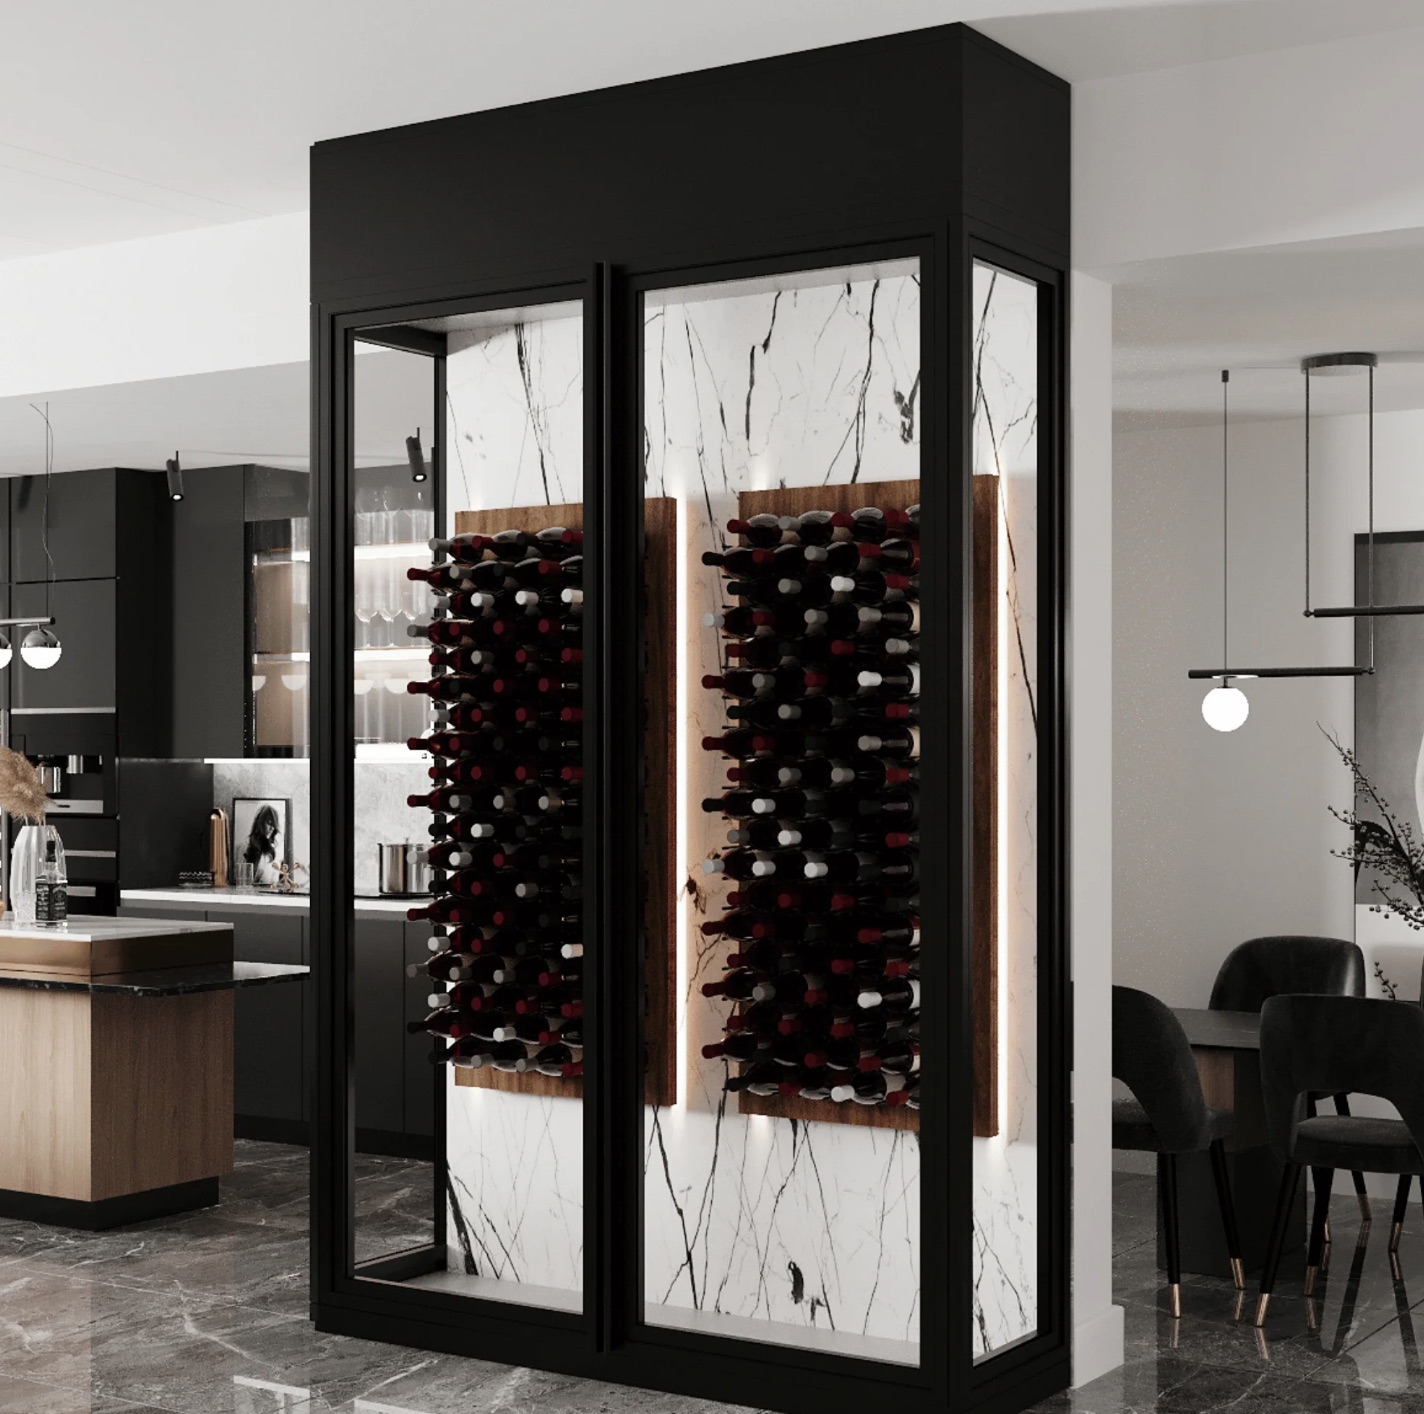 Glass enclosed Vitrus wine storage